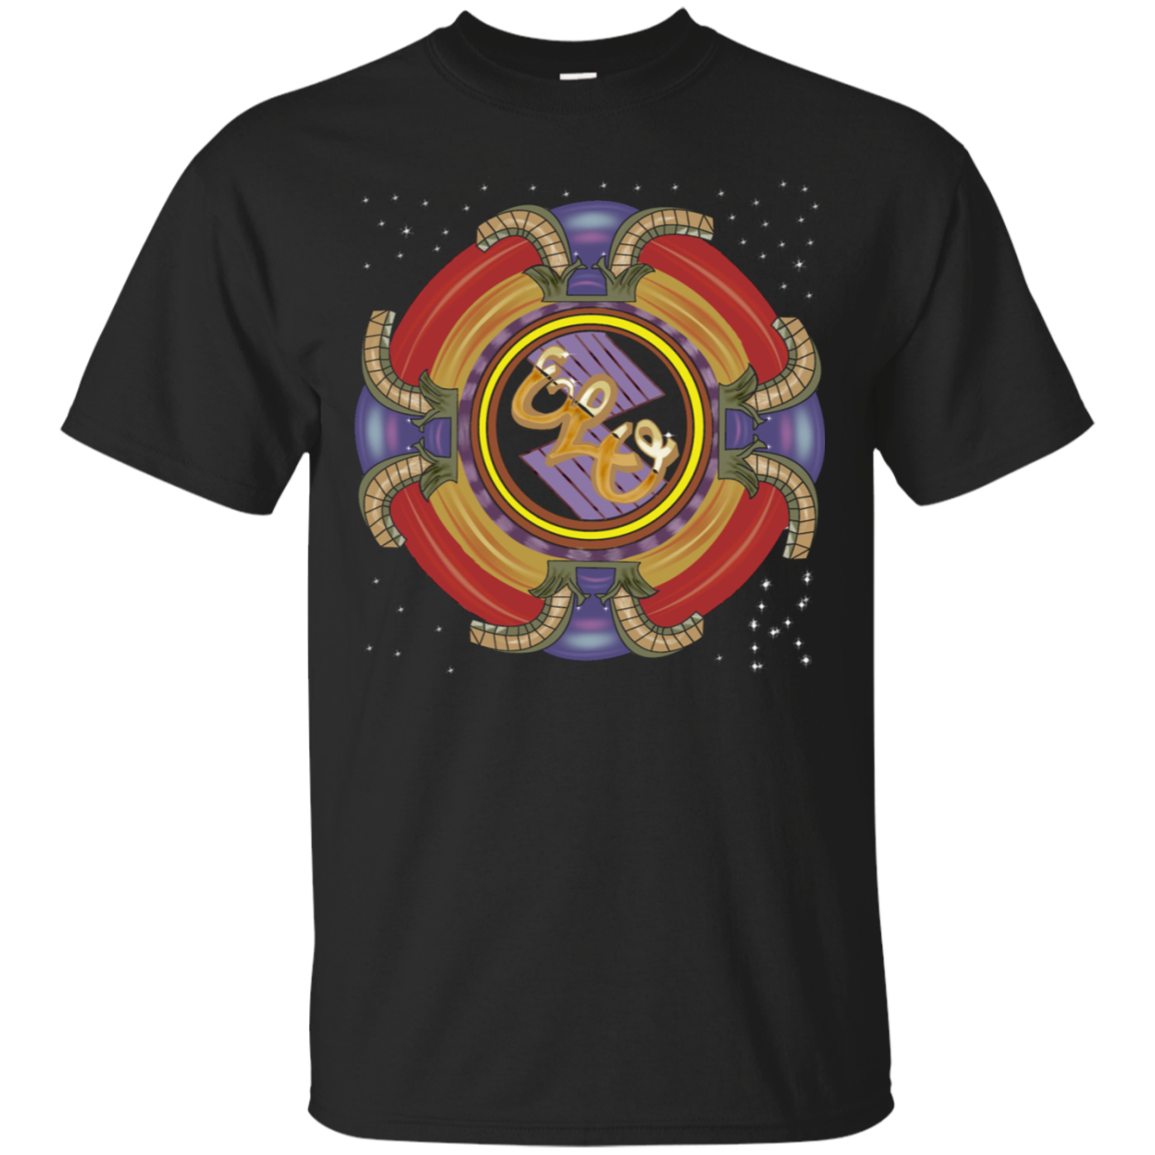 Electric Light Orchestra Logo Shirts - Teesmiley